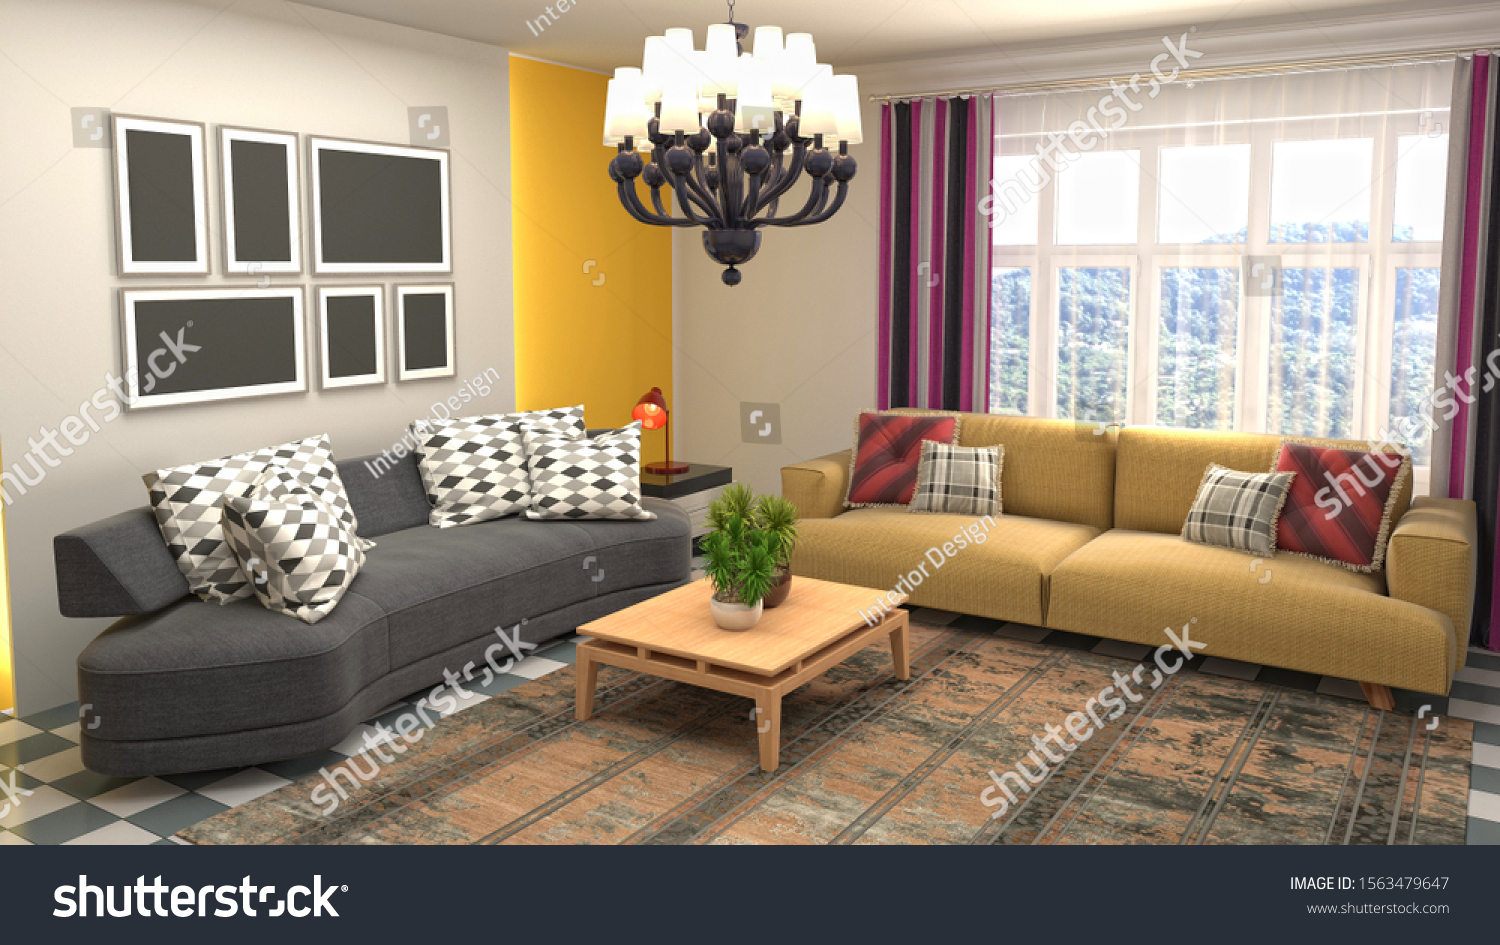 Interior of the living room. 3D illustration. #1563479647